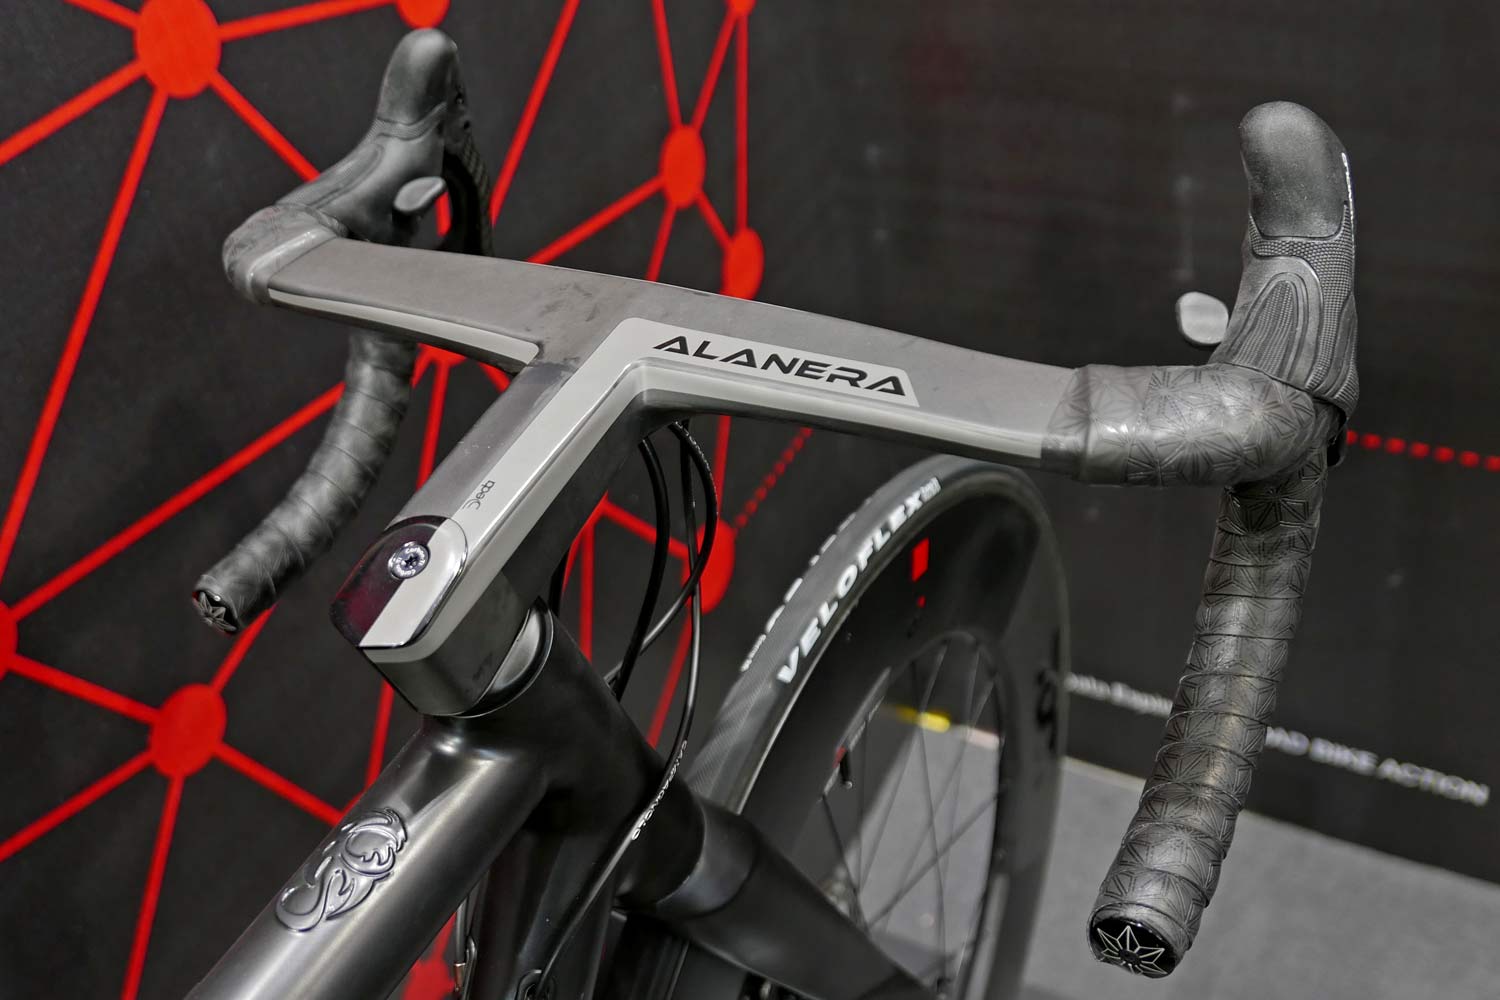 Deda Alanera Integrated Handlebar: A Technological Marvel in Modern Cycling